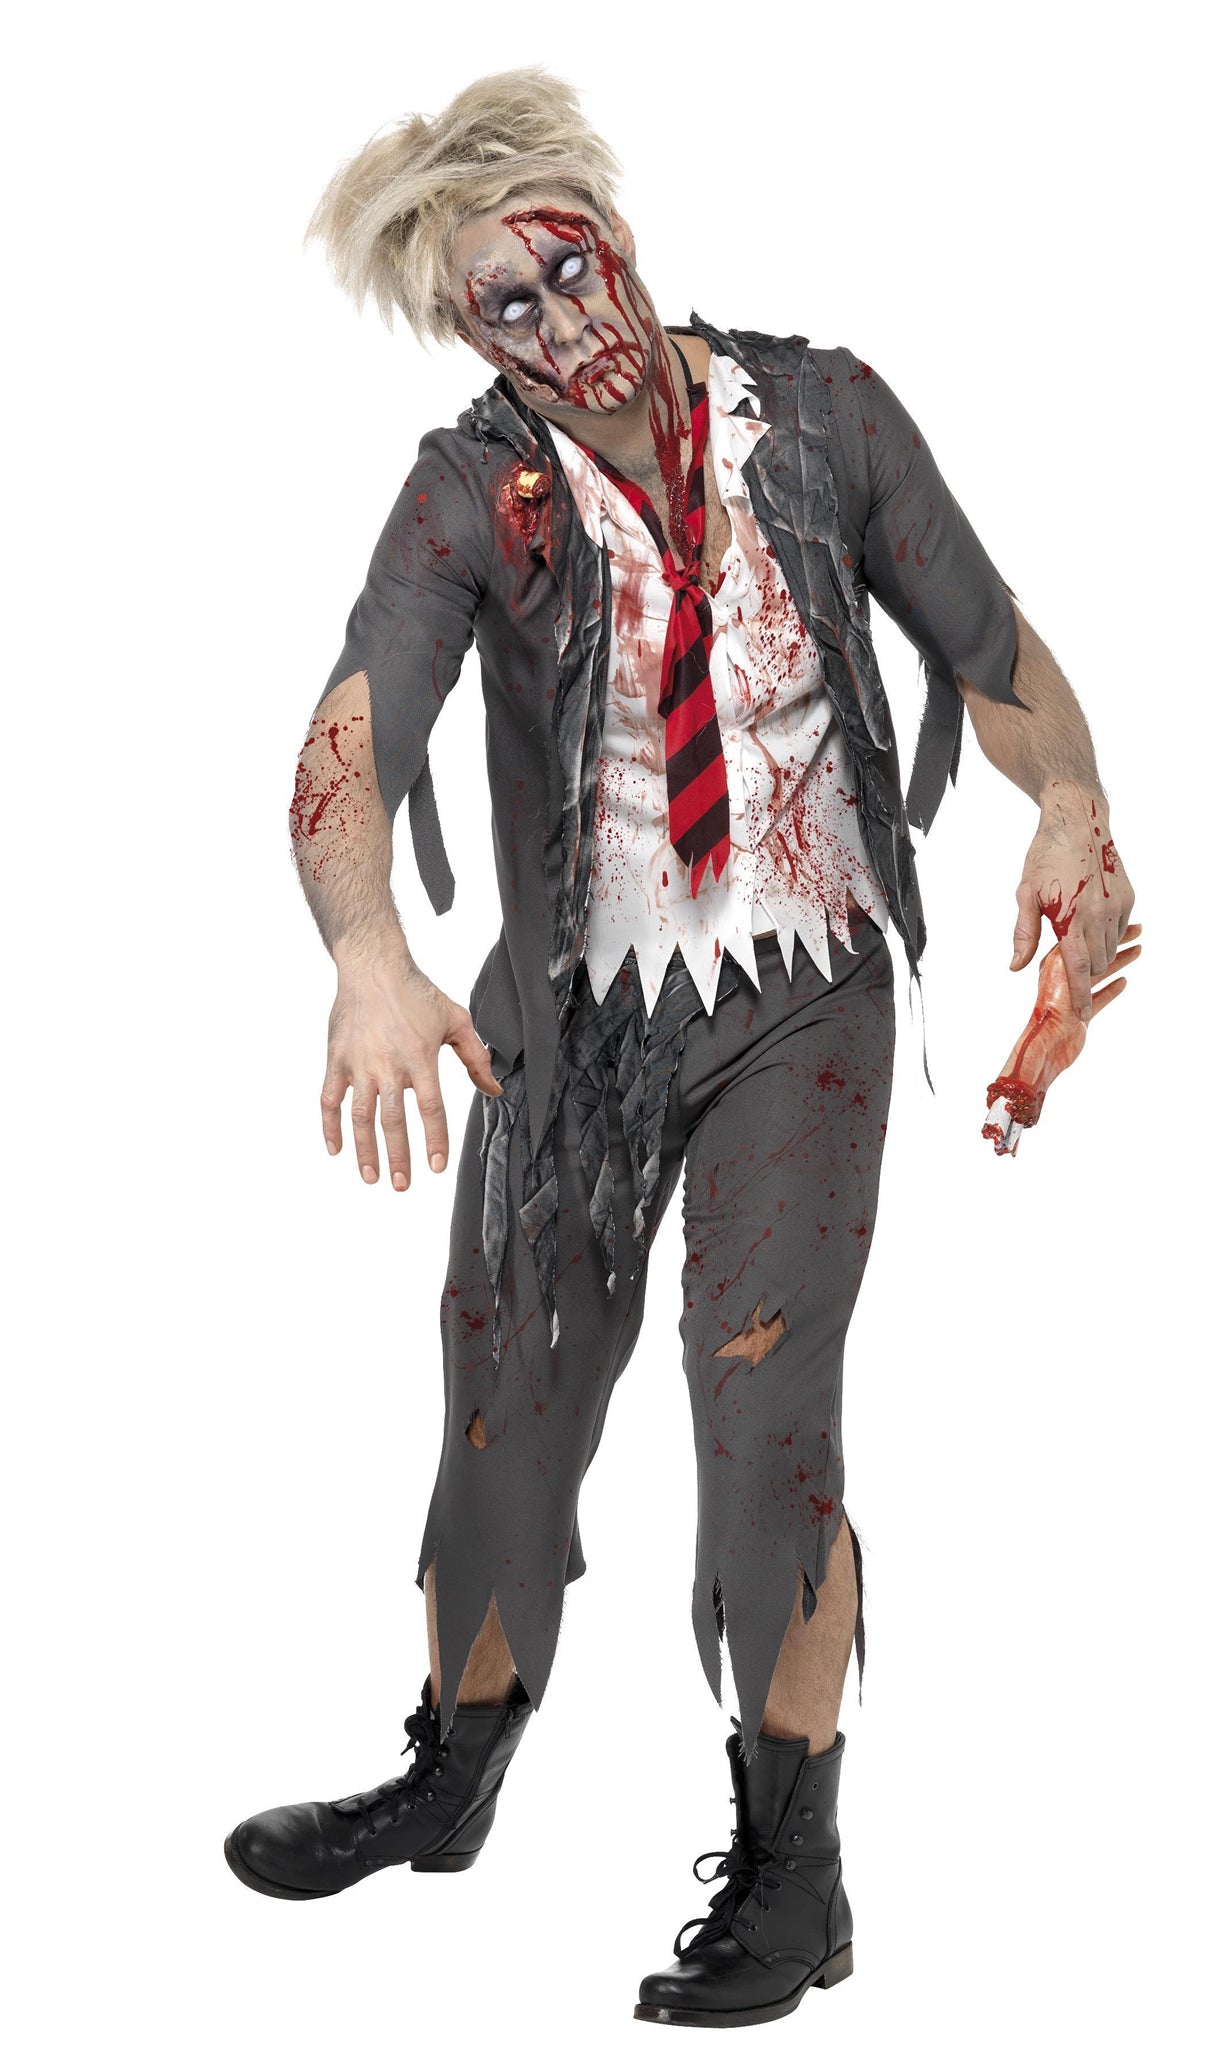 Zombie school boy costume with tie and blood splatters